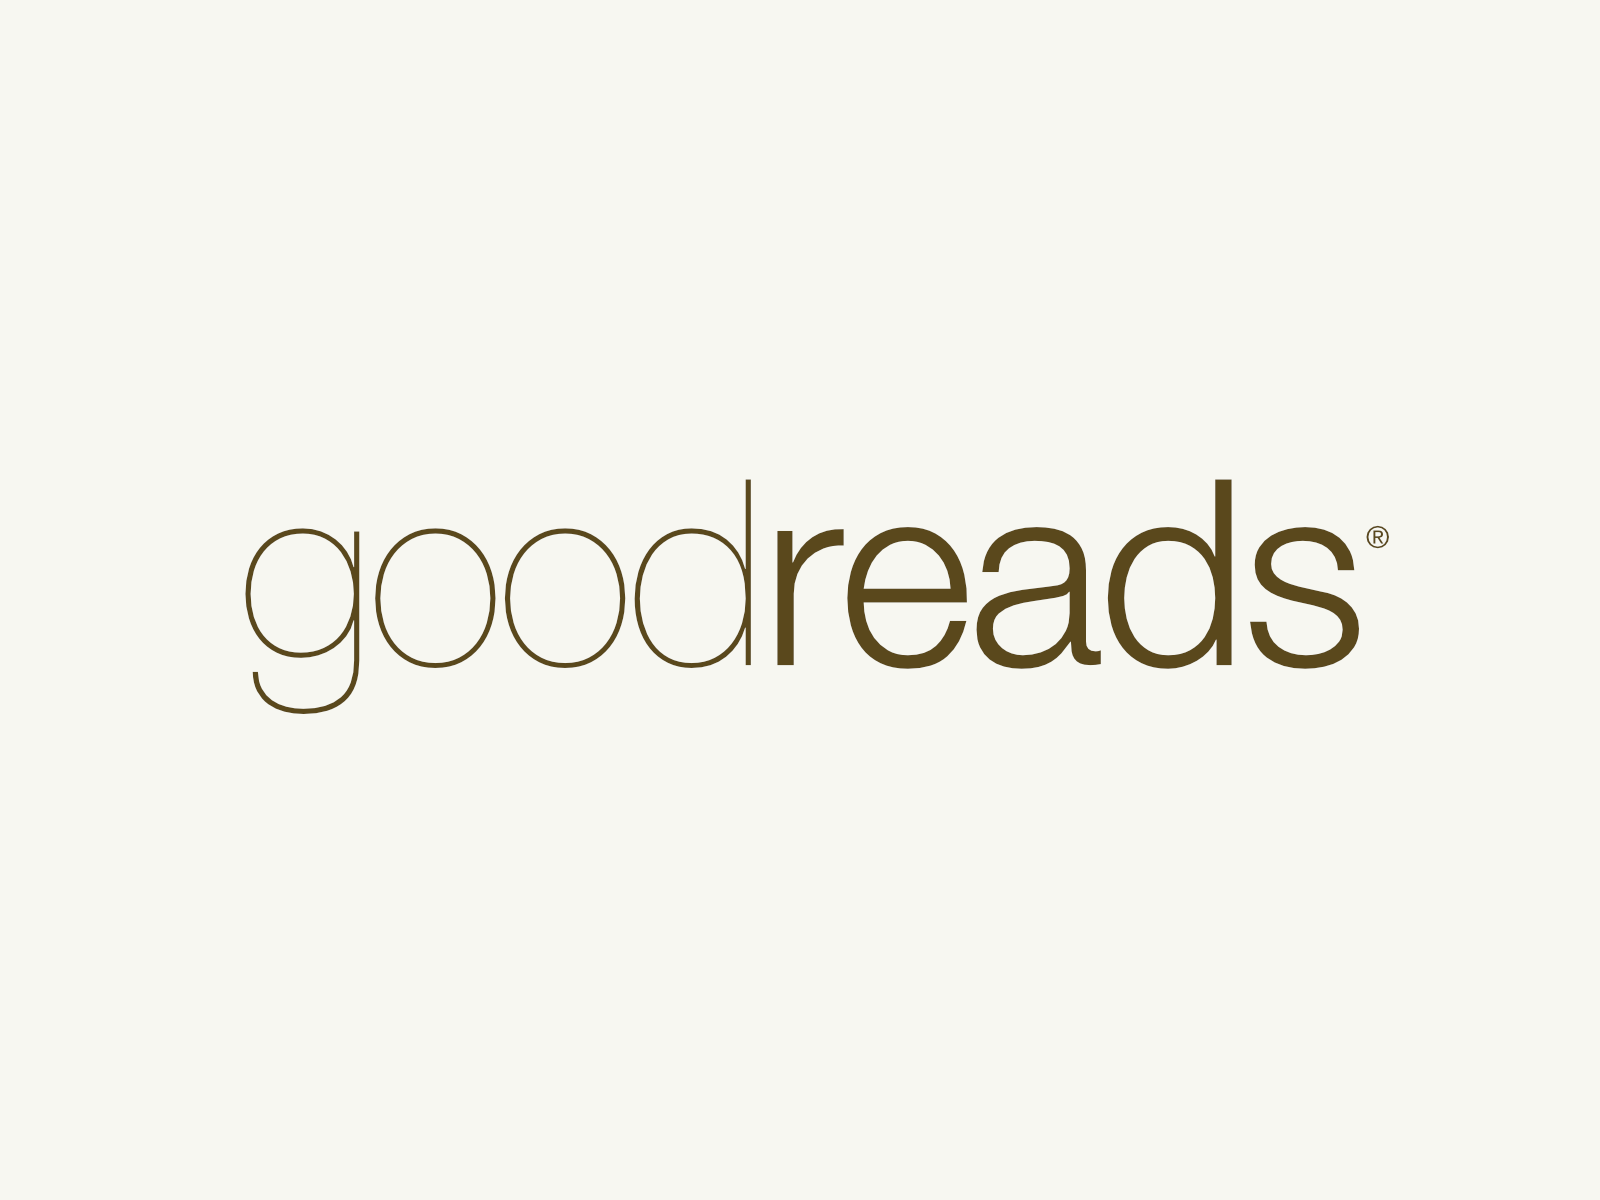 Goodreads Logo - Dribbble - goodreads-logo-1600x1200.png by Zack Onisko